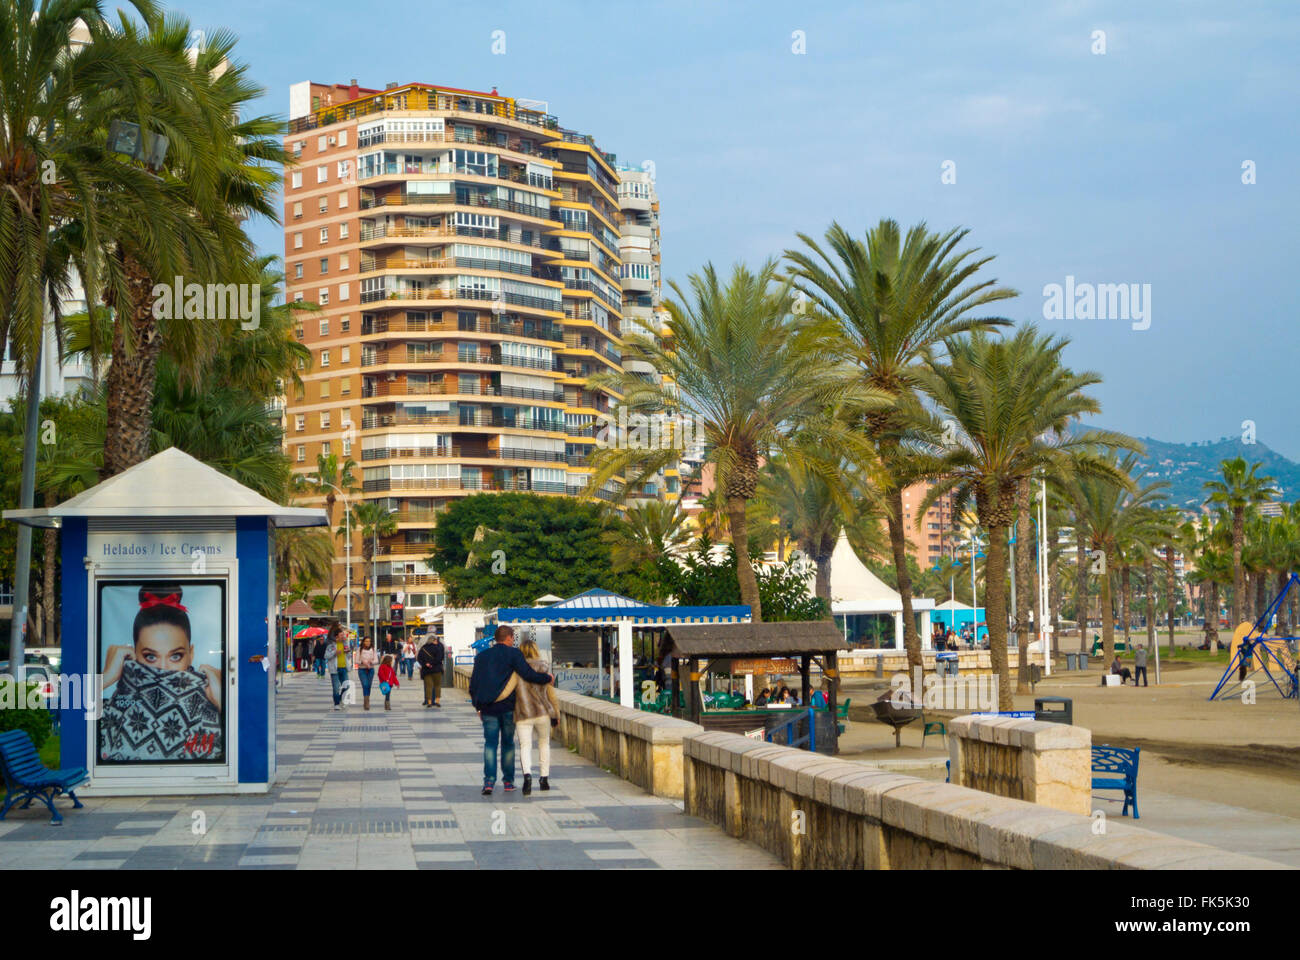 Paseo Marítimo Pablo Ruiz Picasso, seaside promenade, Malaga, Andalucia, Spain Stock Photo